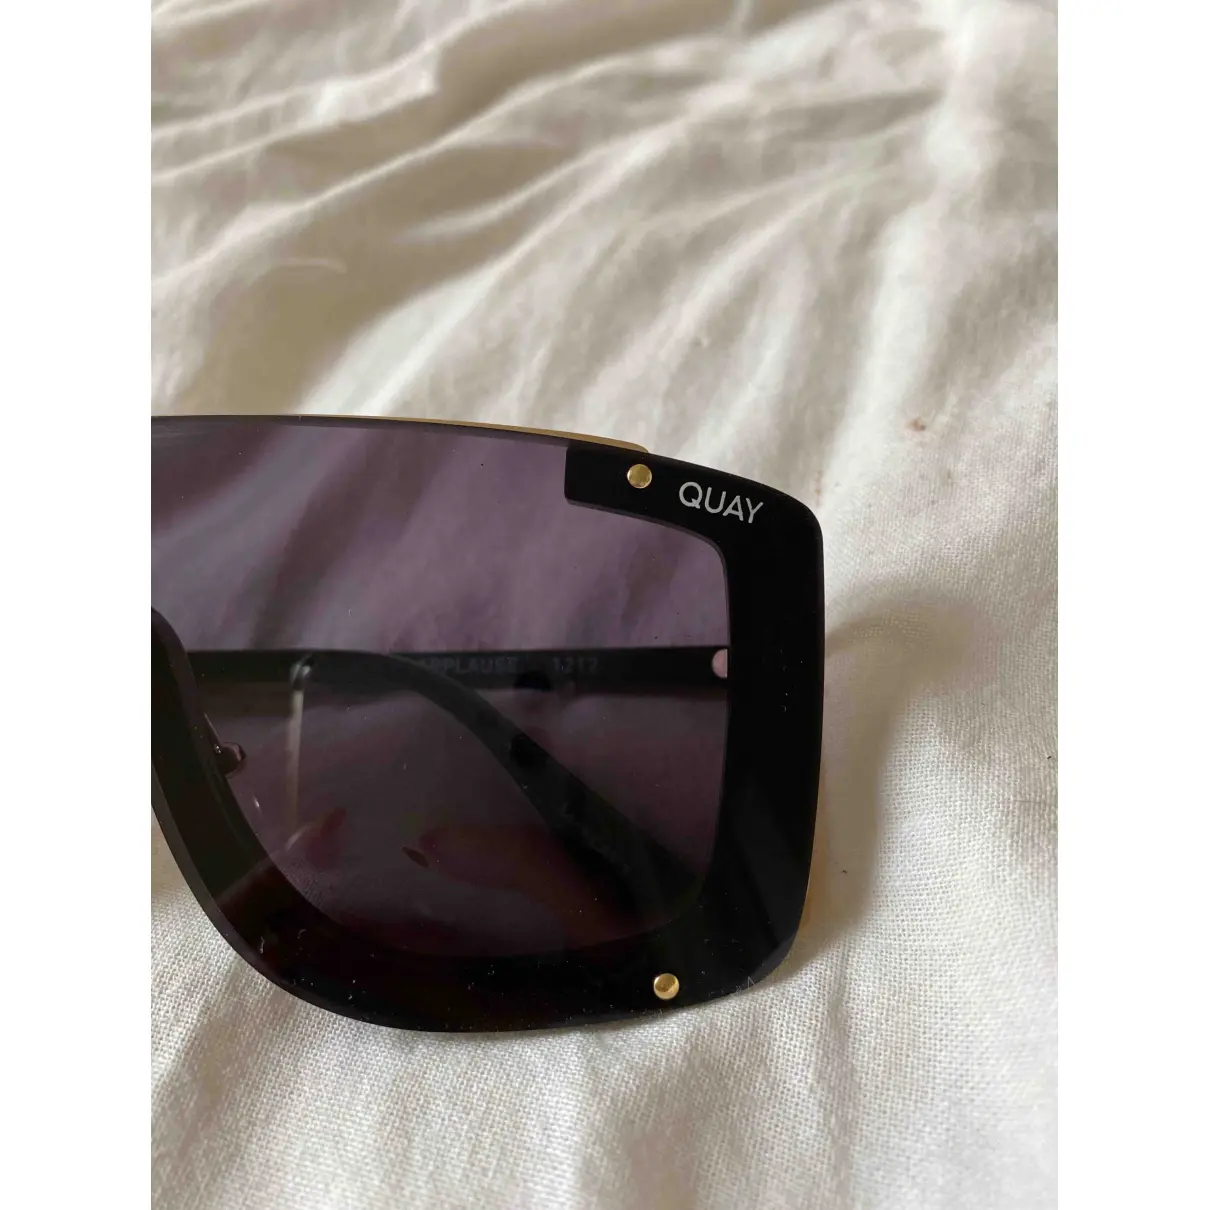 Buy Quay Oversized sunglasses online